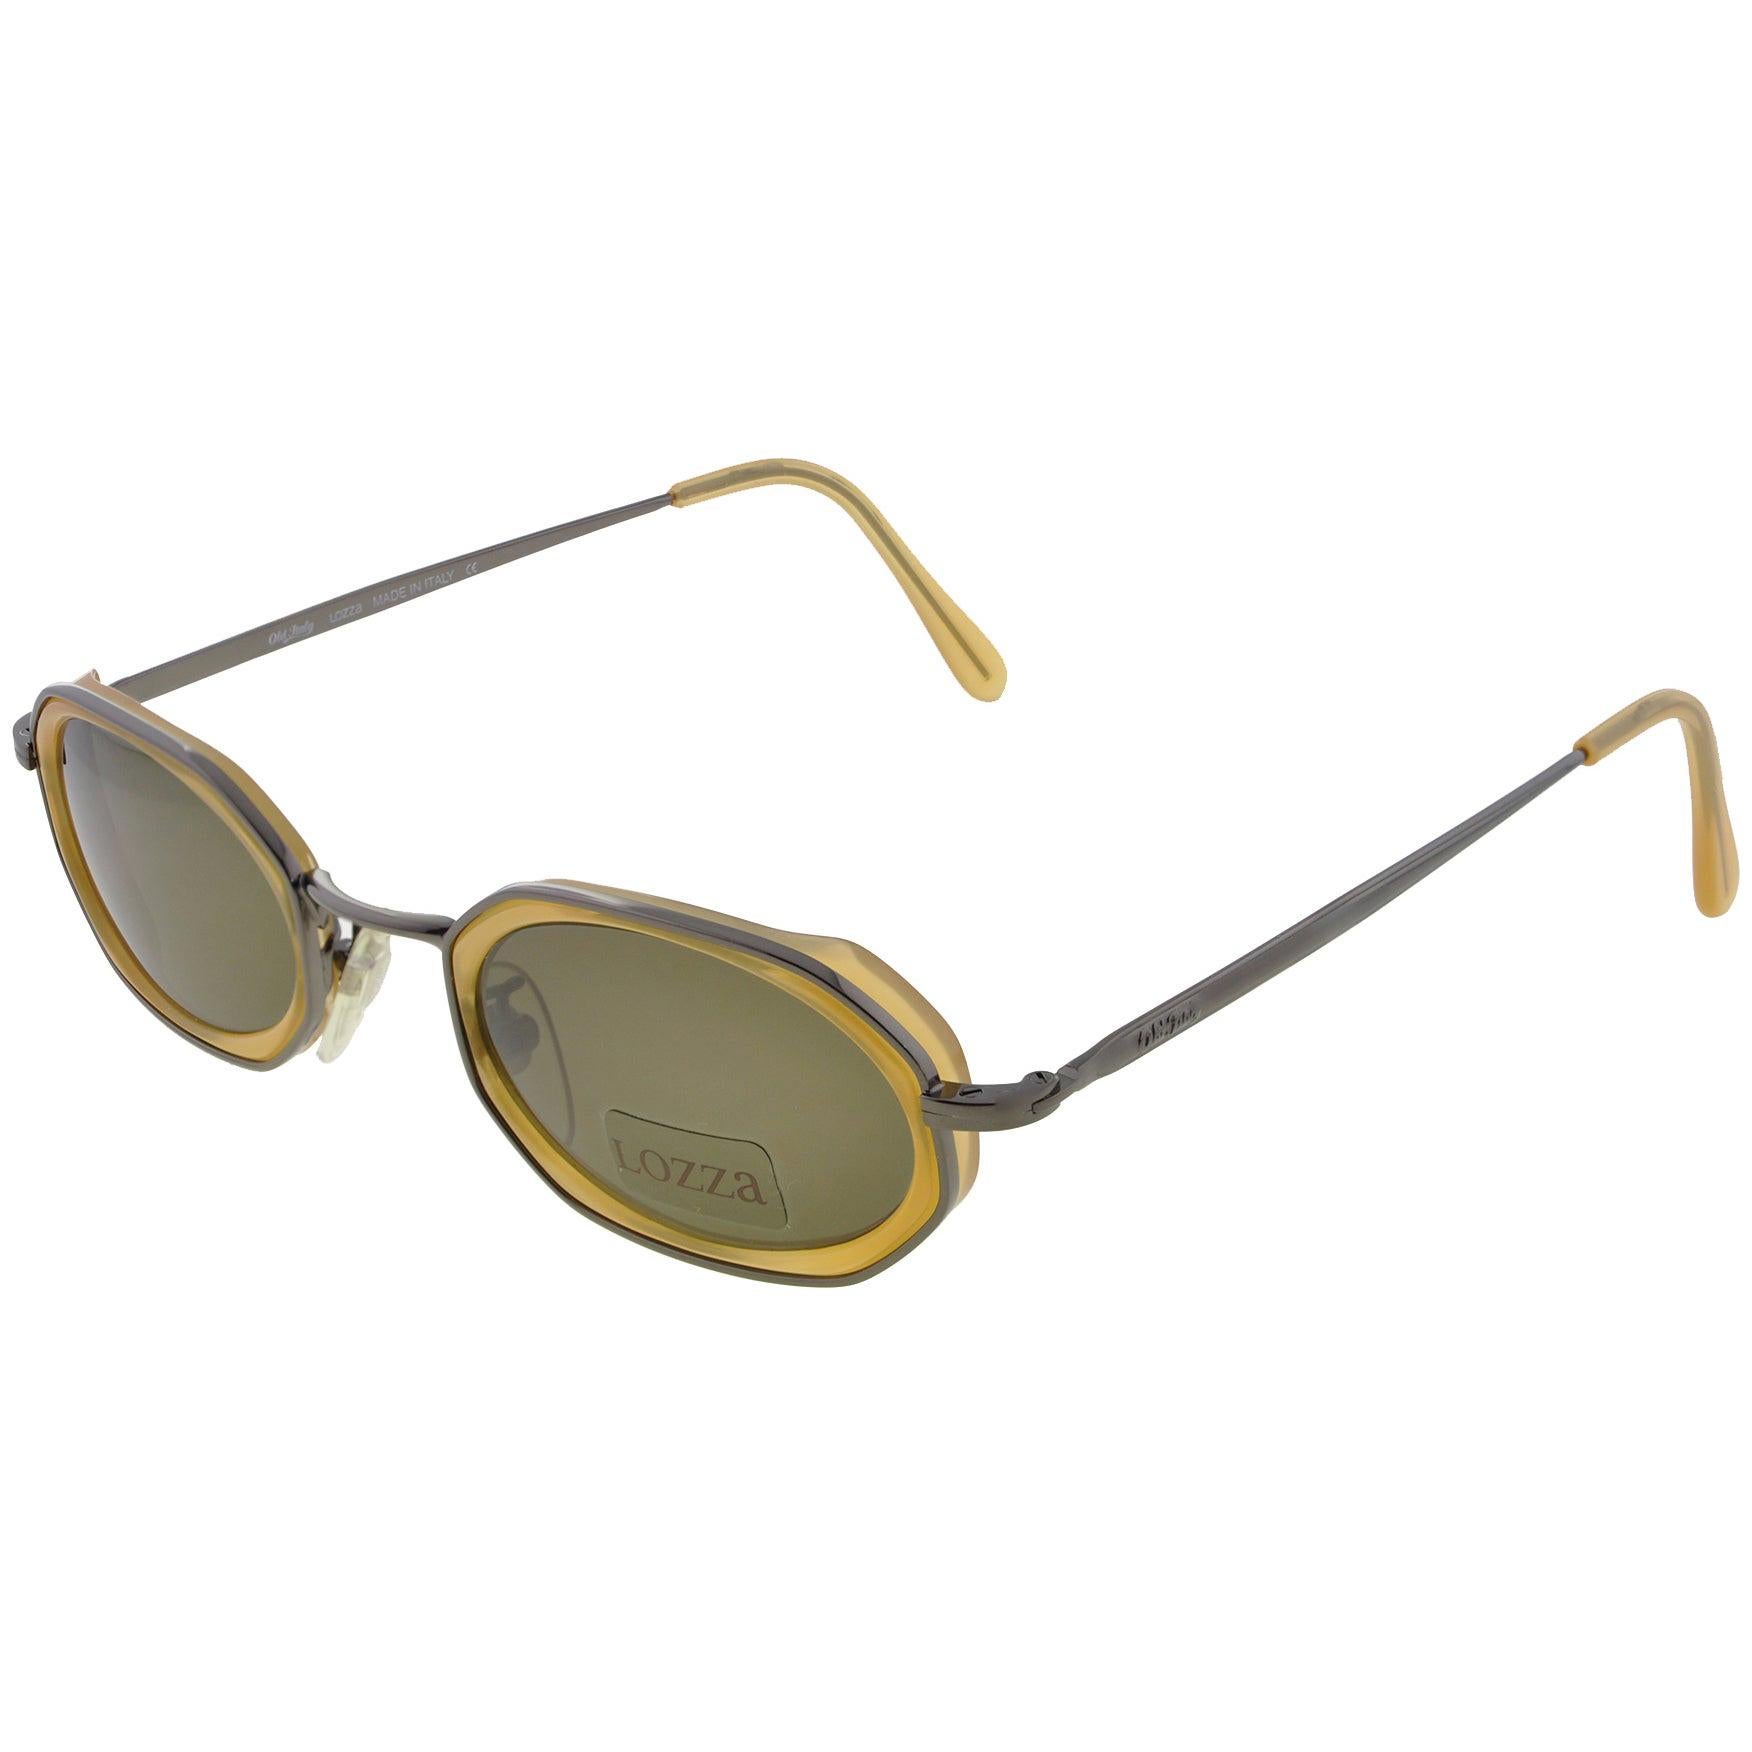 Lozza vintage sunglasses hexagonal, Italy 80s